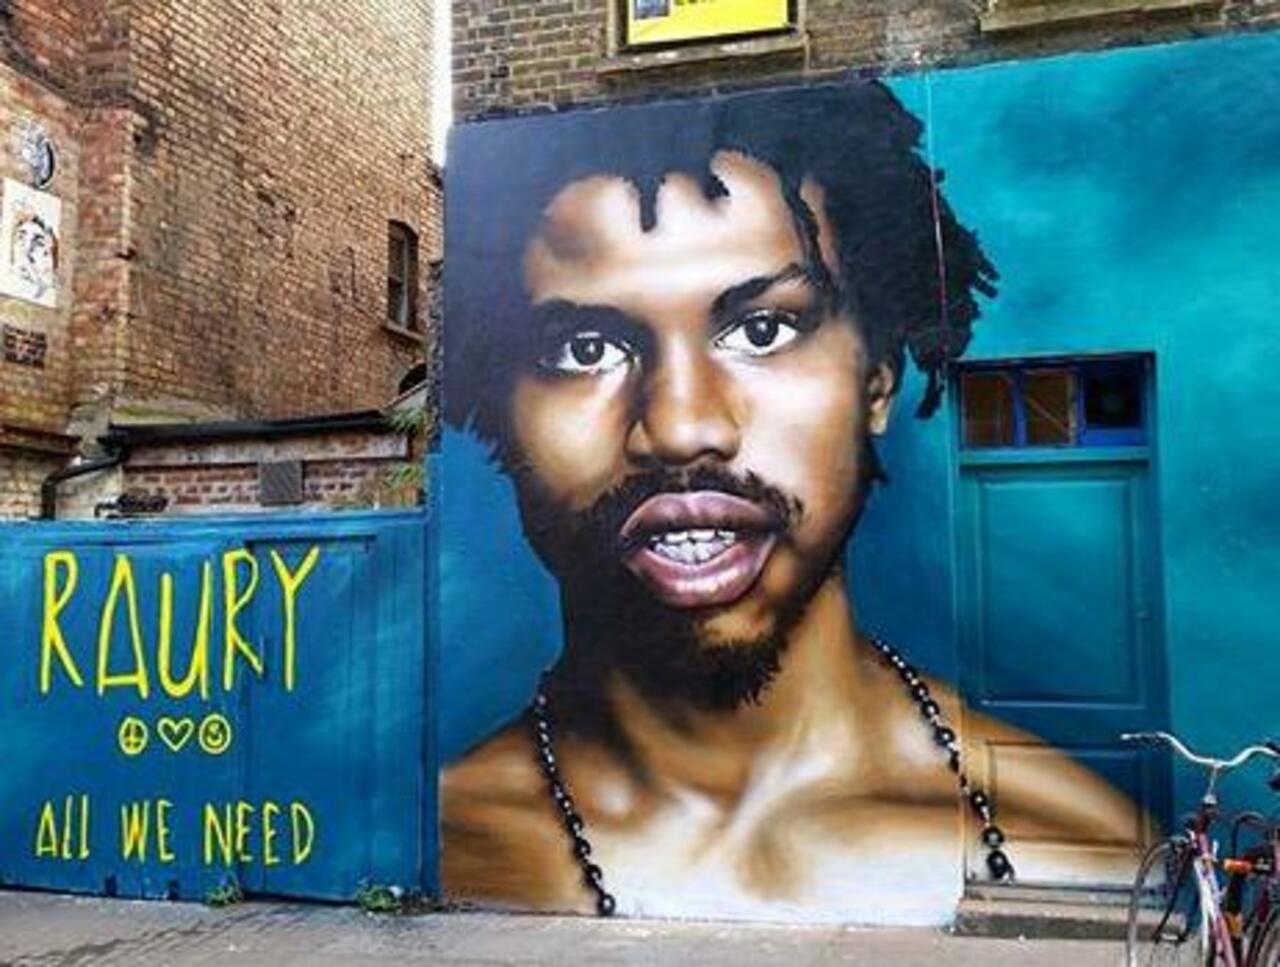 JewelNiles1: New Street Art of Raury by Olliver Switch in Brick Lane 

#art #graffiti #mural #streetart http://t.co/9Lfw6efLMB